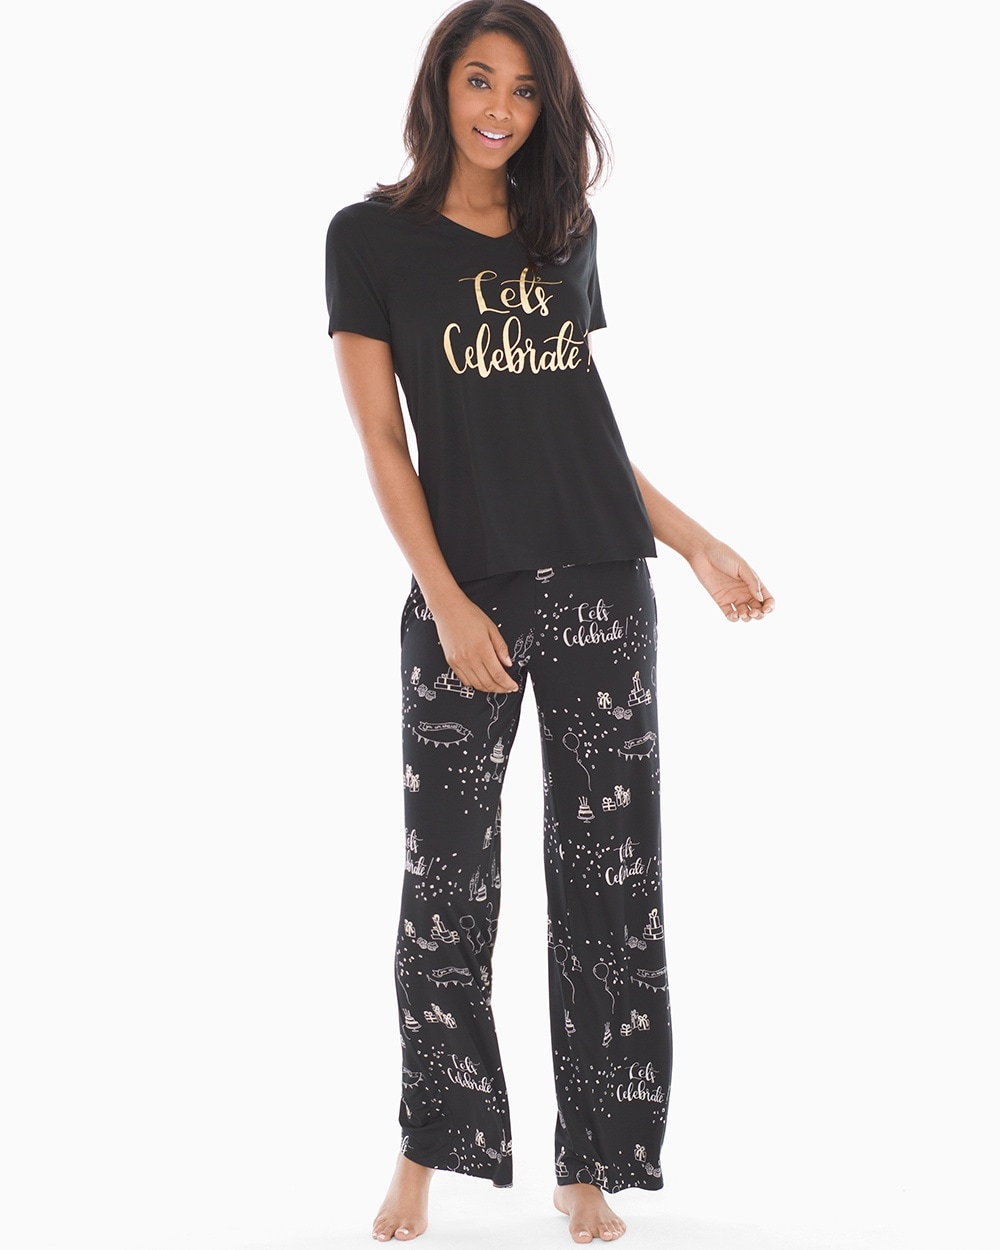 Cool Nights Short Sleeve Pajama Set Celebrate Graphic Black